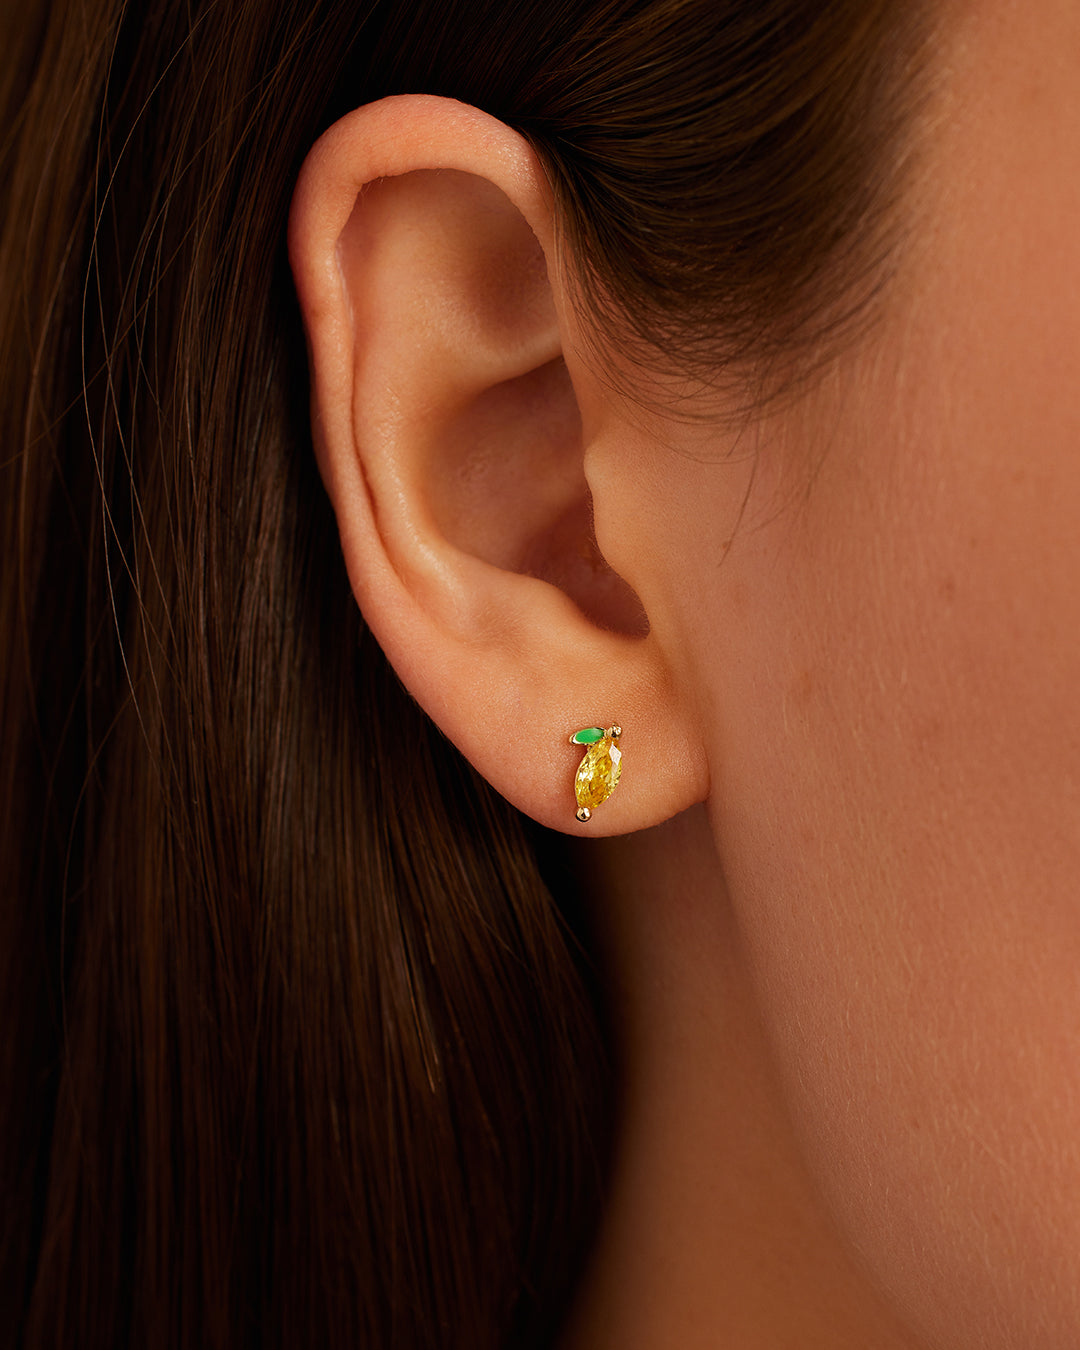 Trio Threaded Flat Back Studs Earring in 14K Solid Gold/Pair, Women's by Gorjana